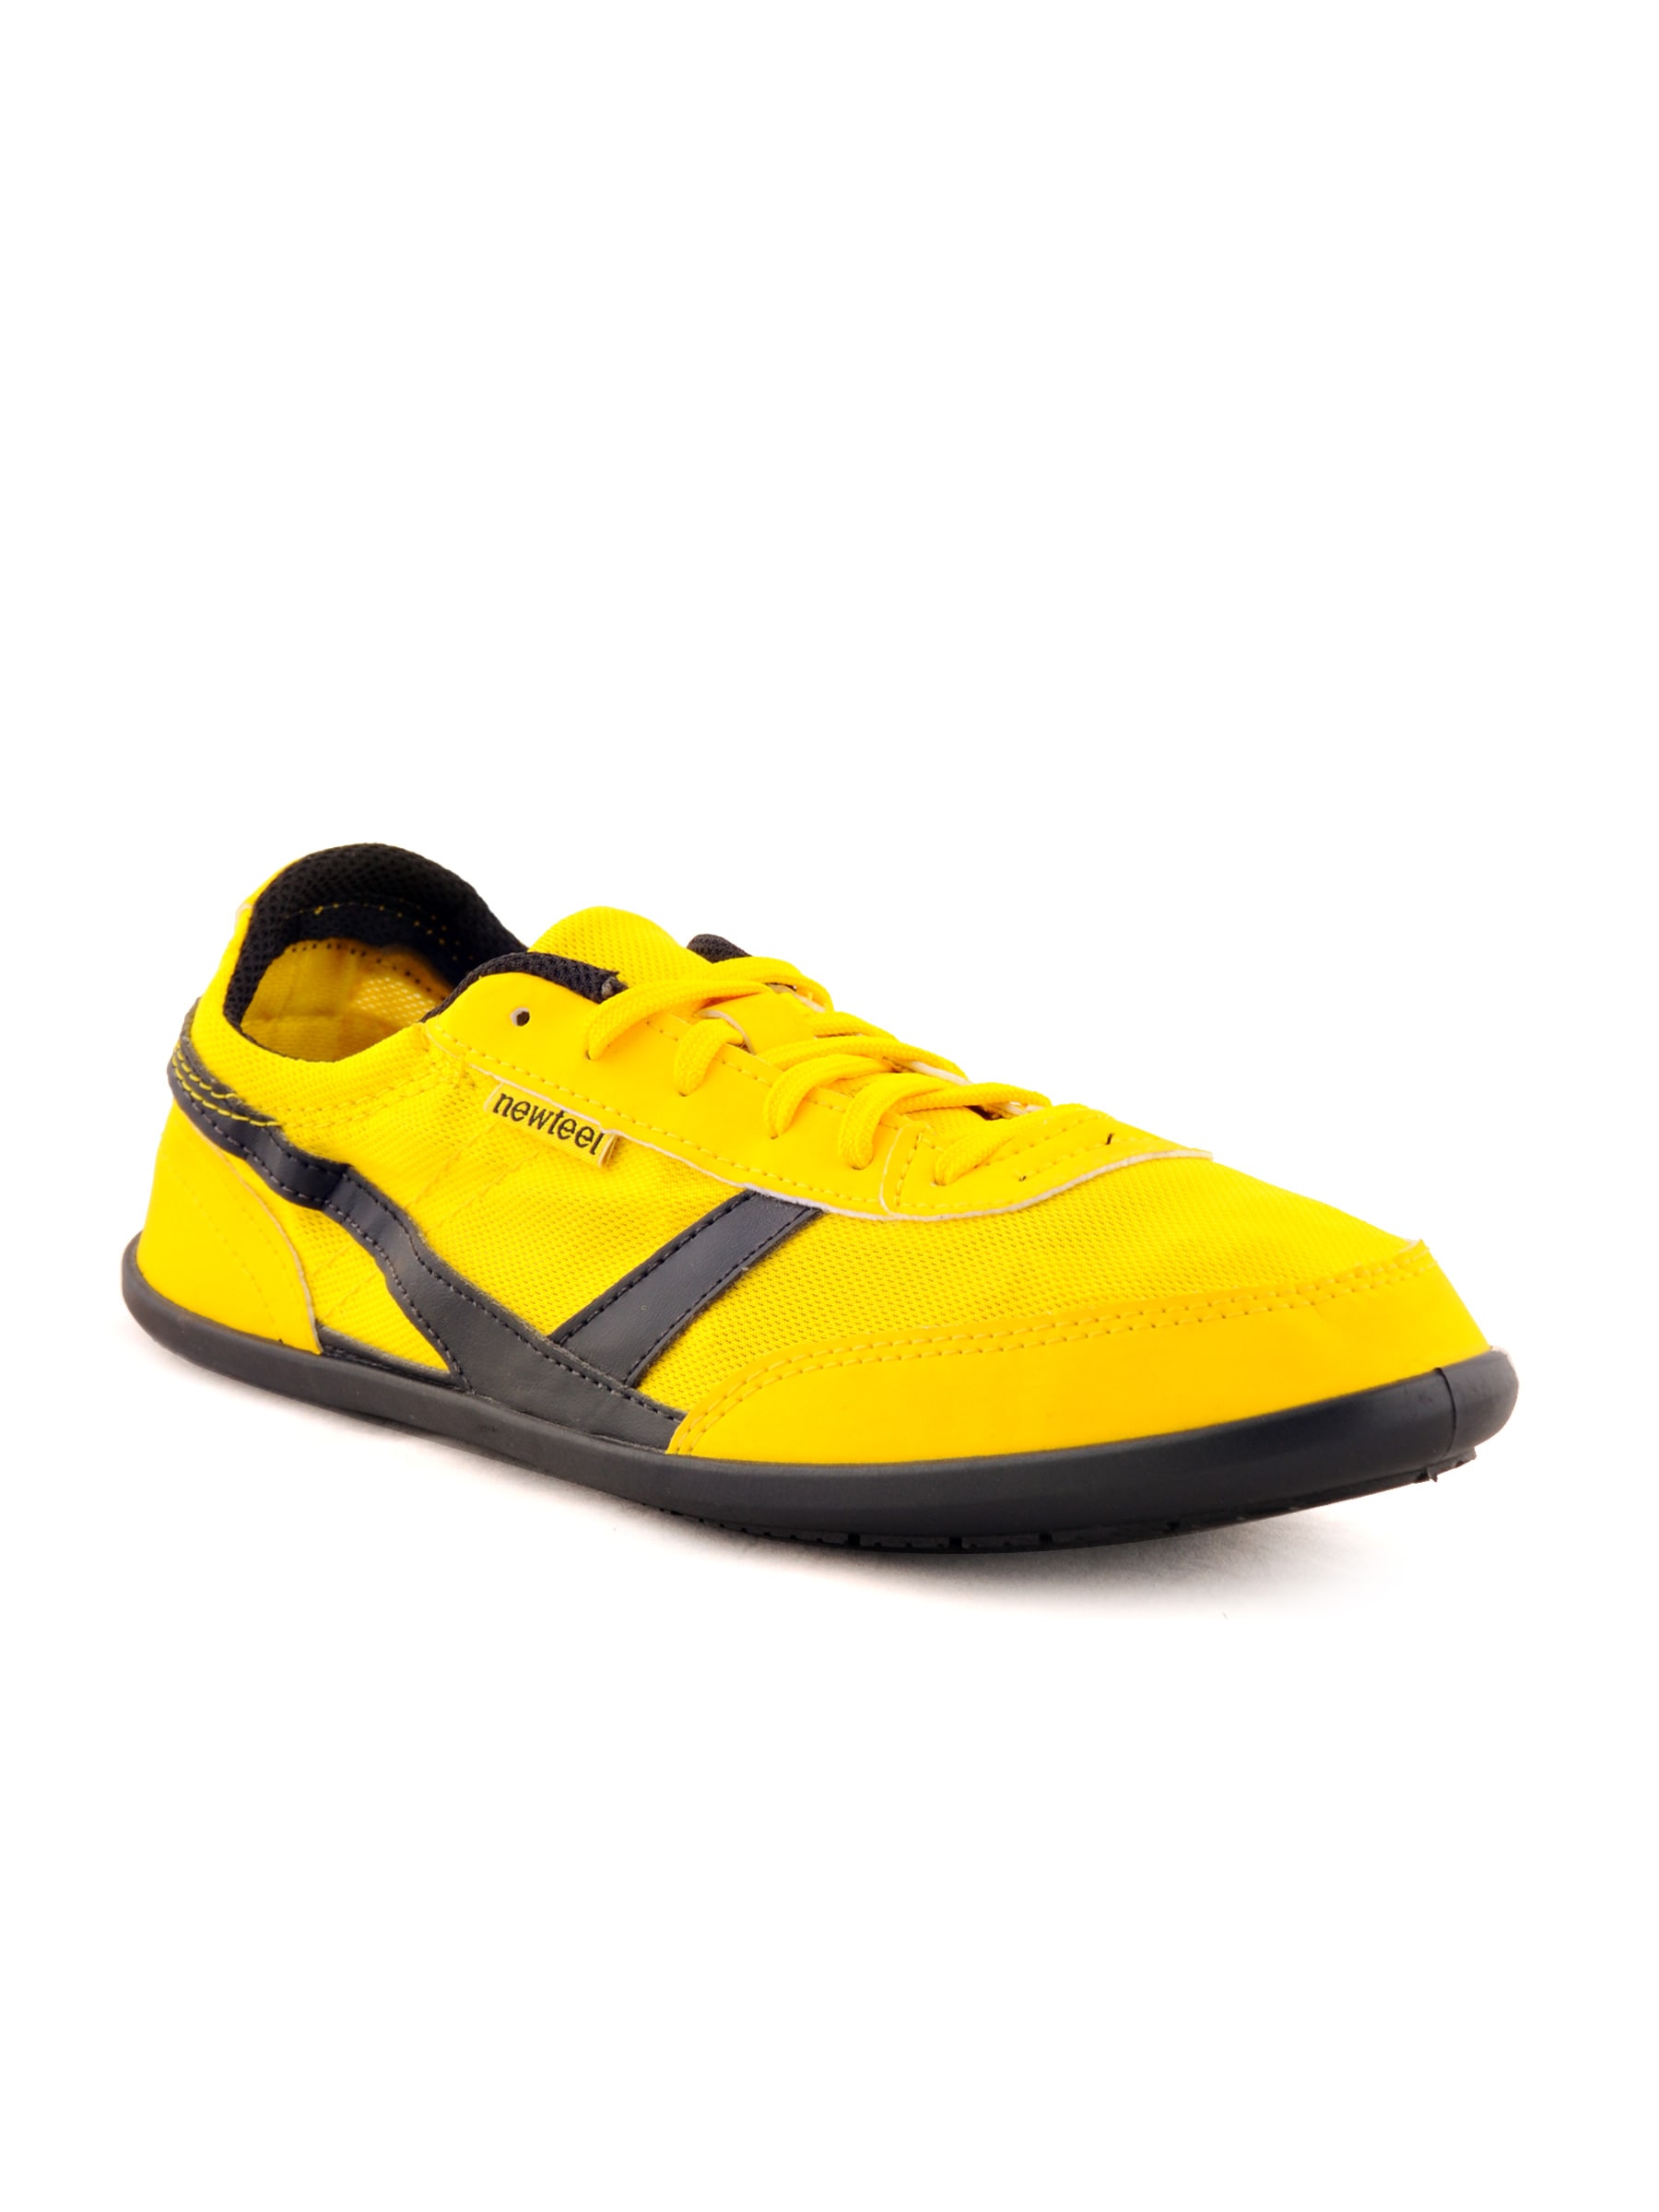 Newfeel Unisex Sports Yellow Sports Shoes